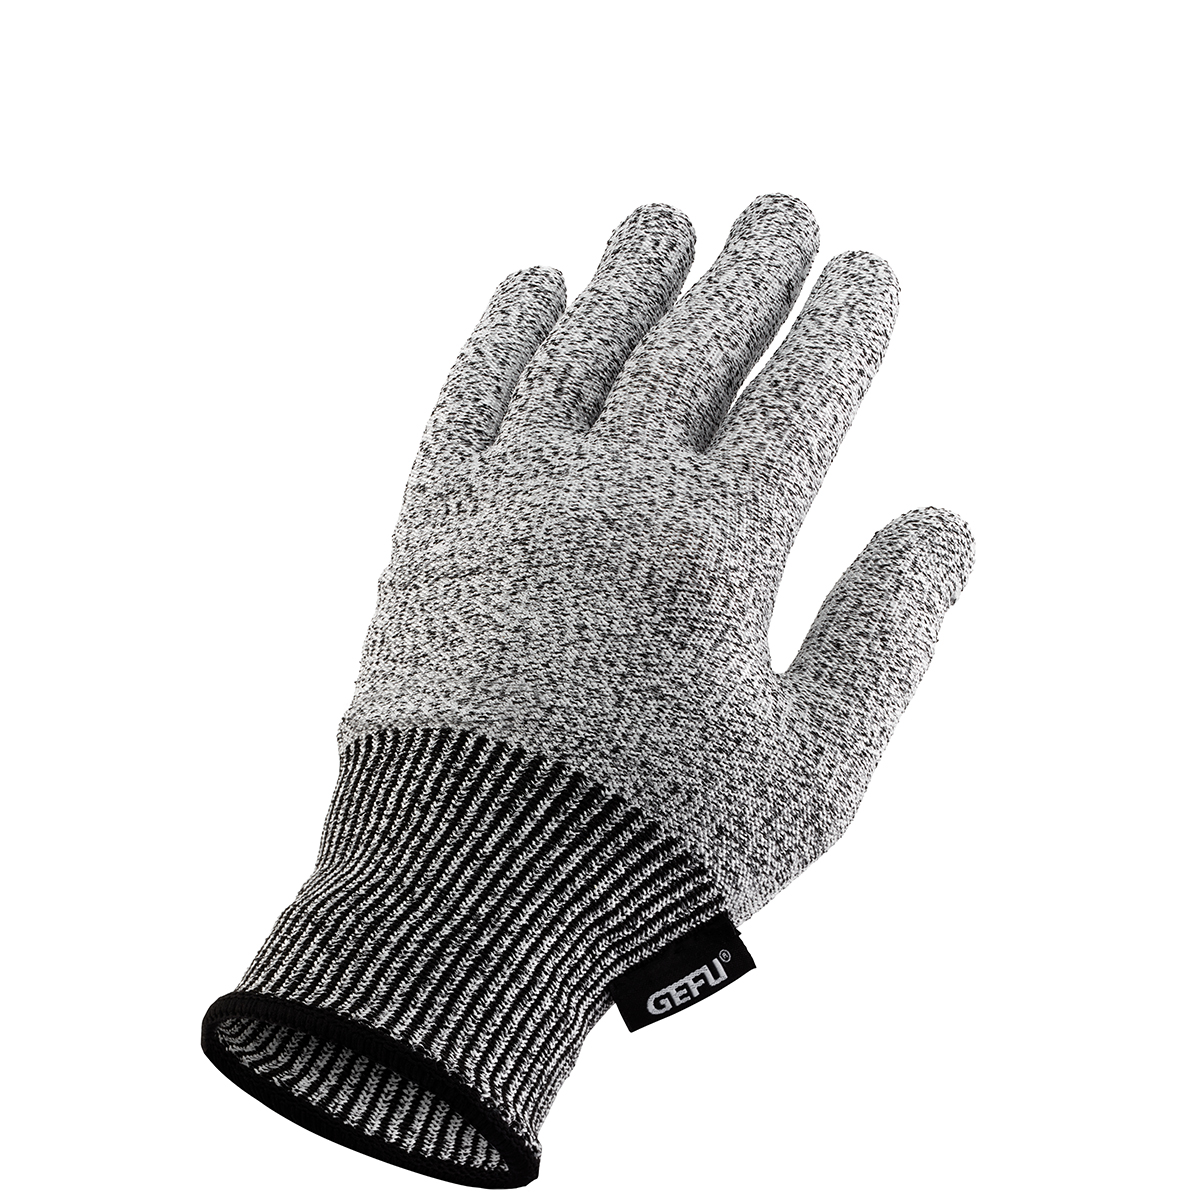 Cut protection glove SECURO